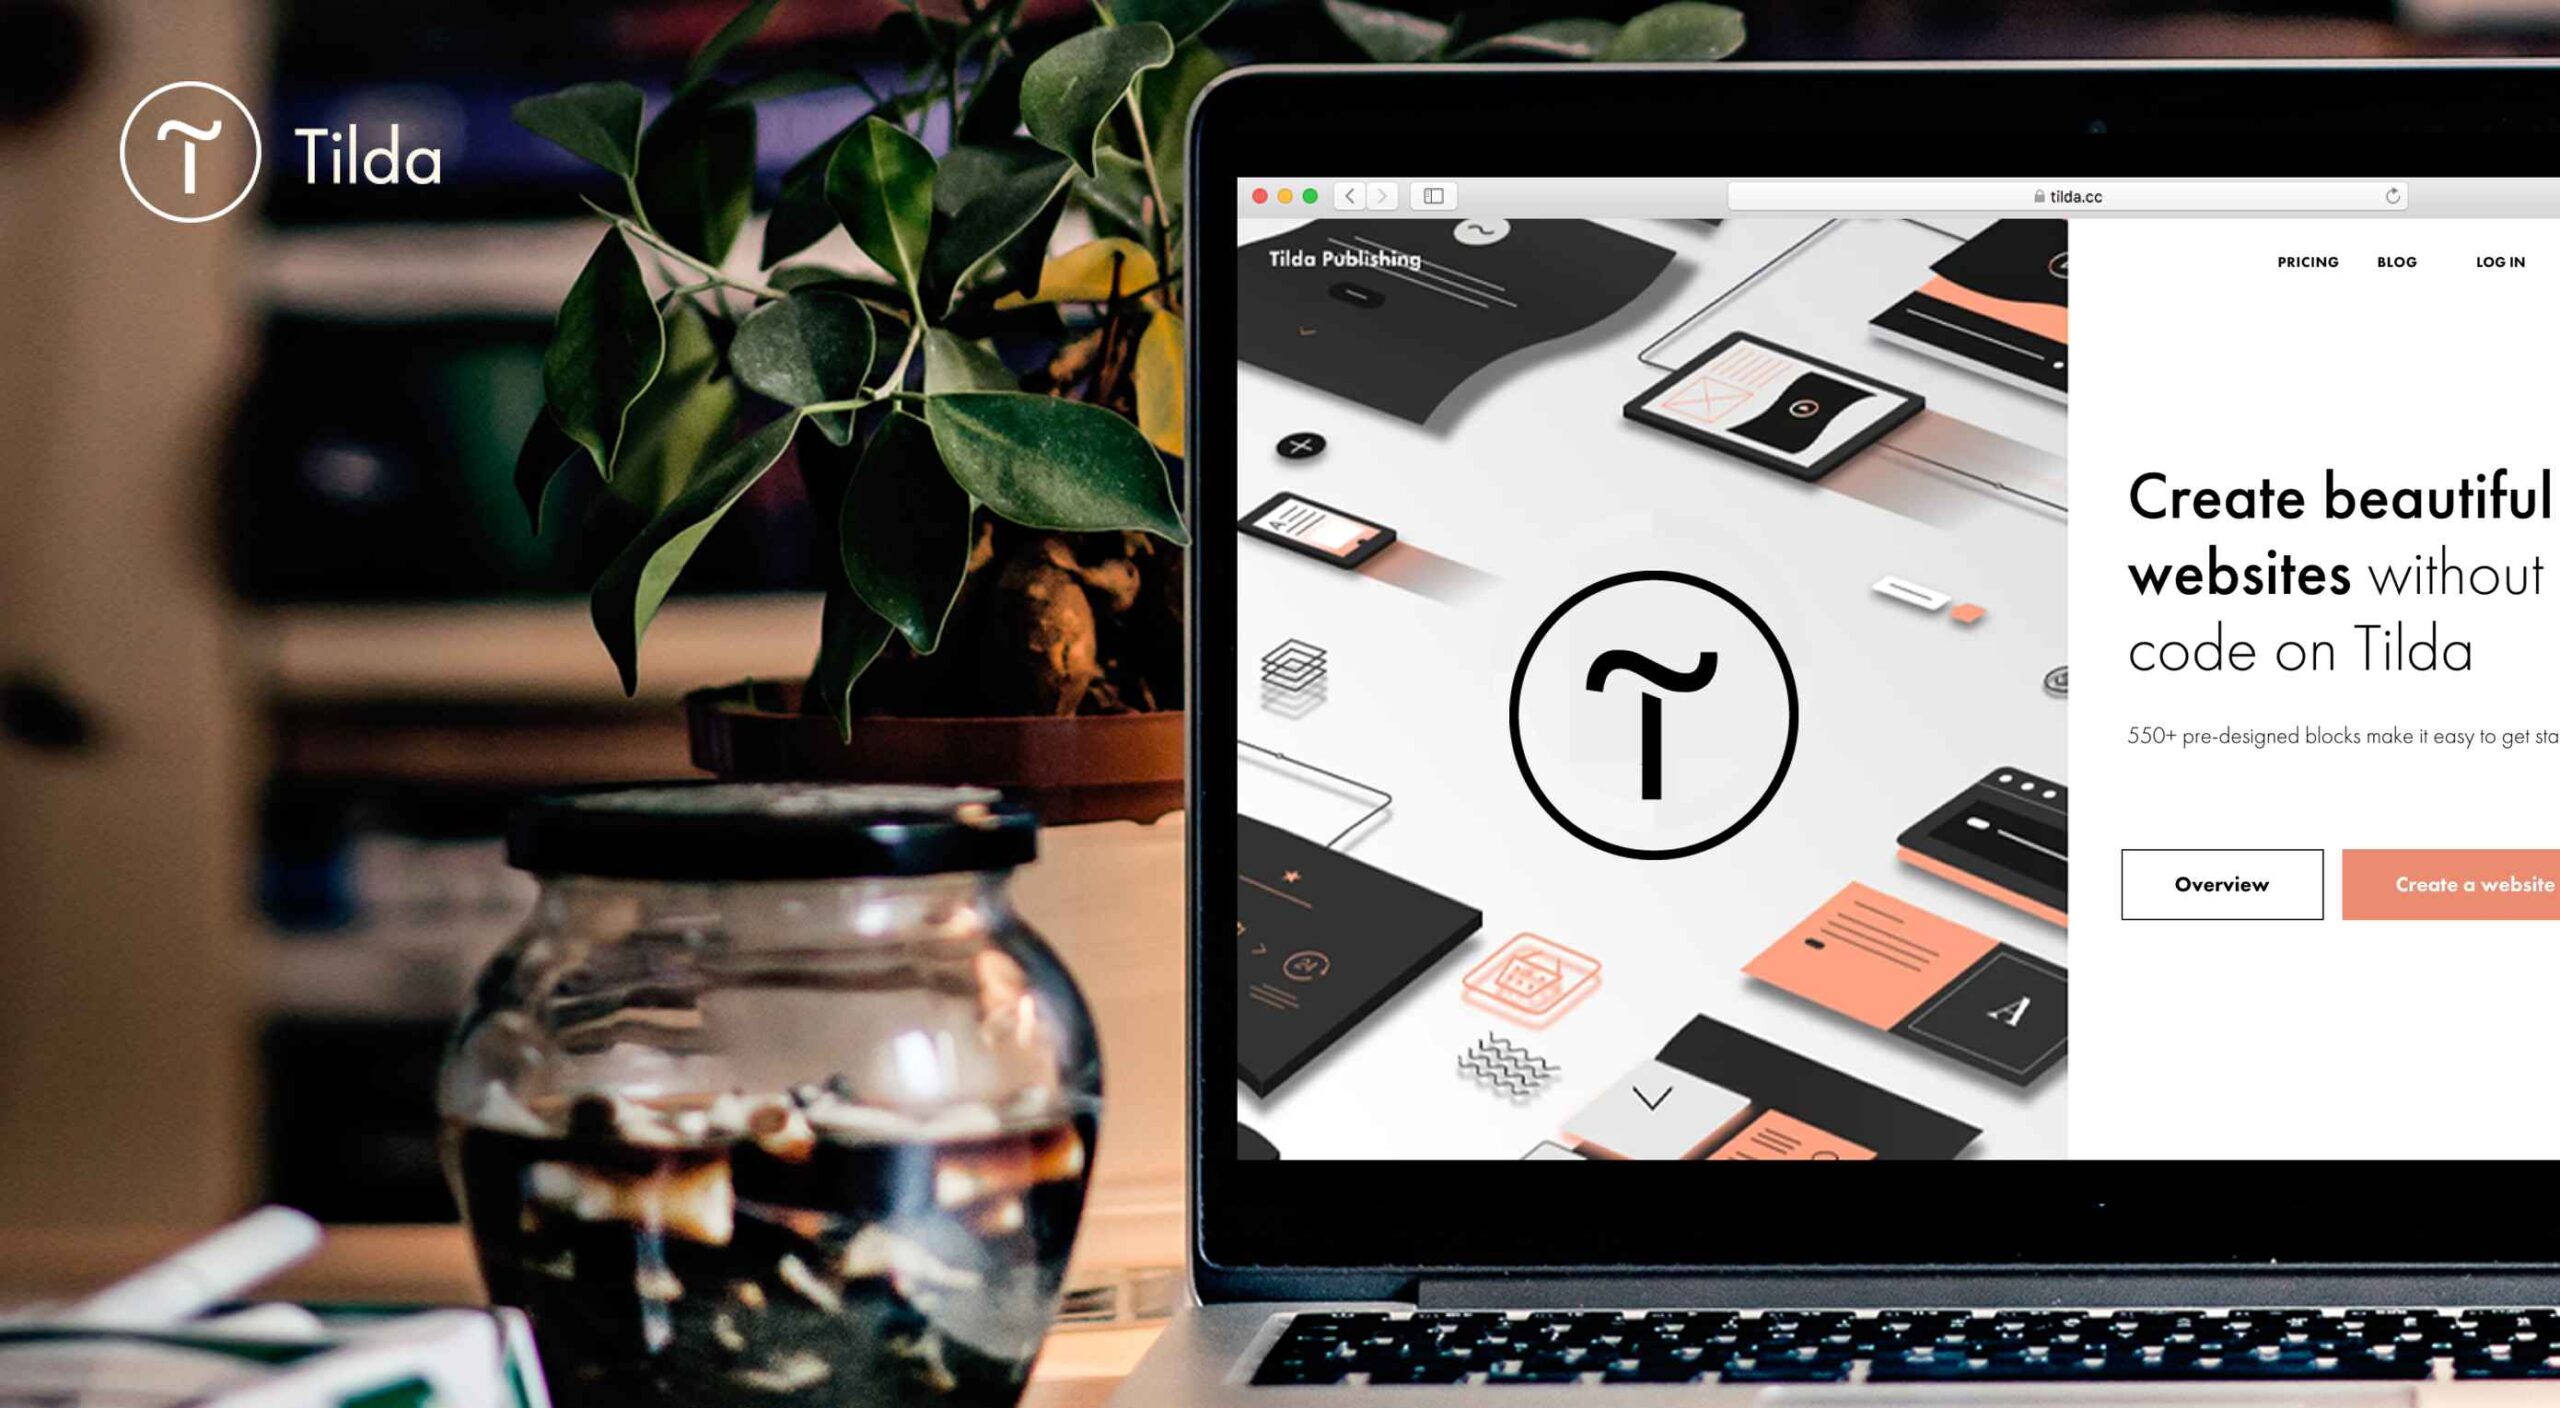 Tilda – The Website Builder That Disrupted The Way We Create Websites